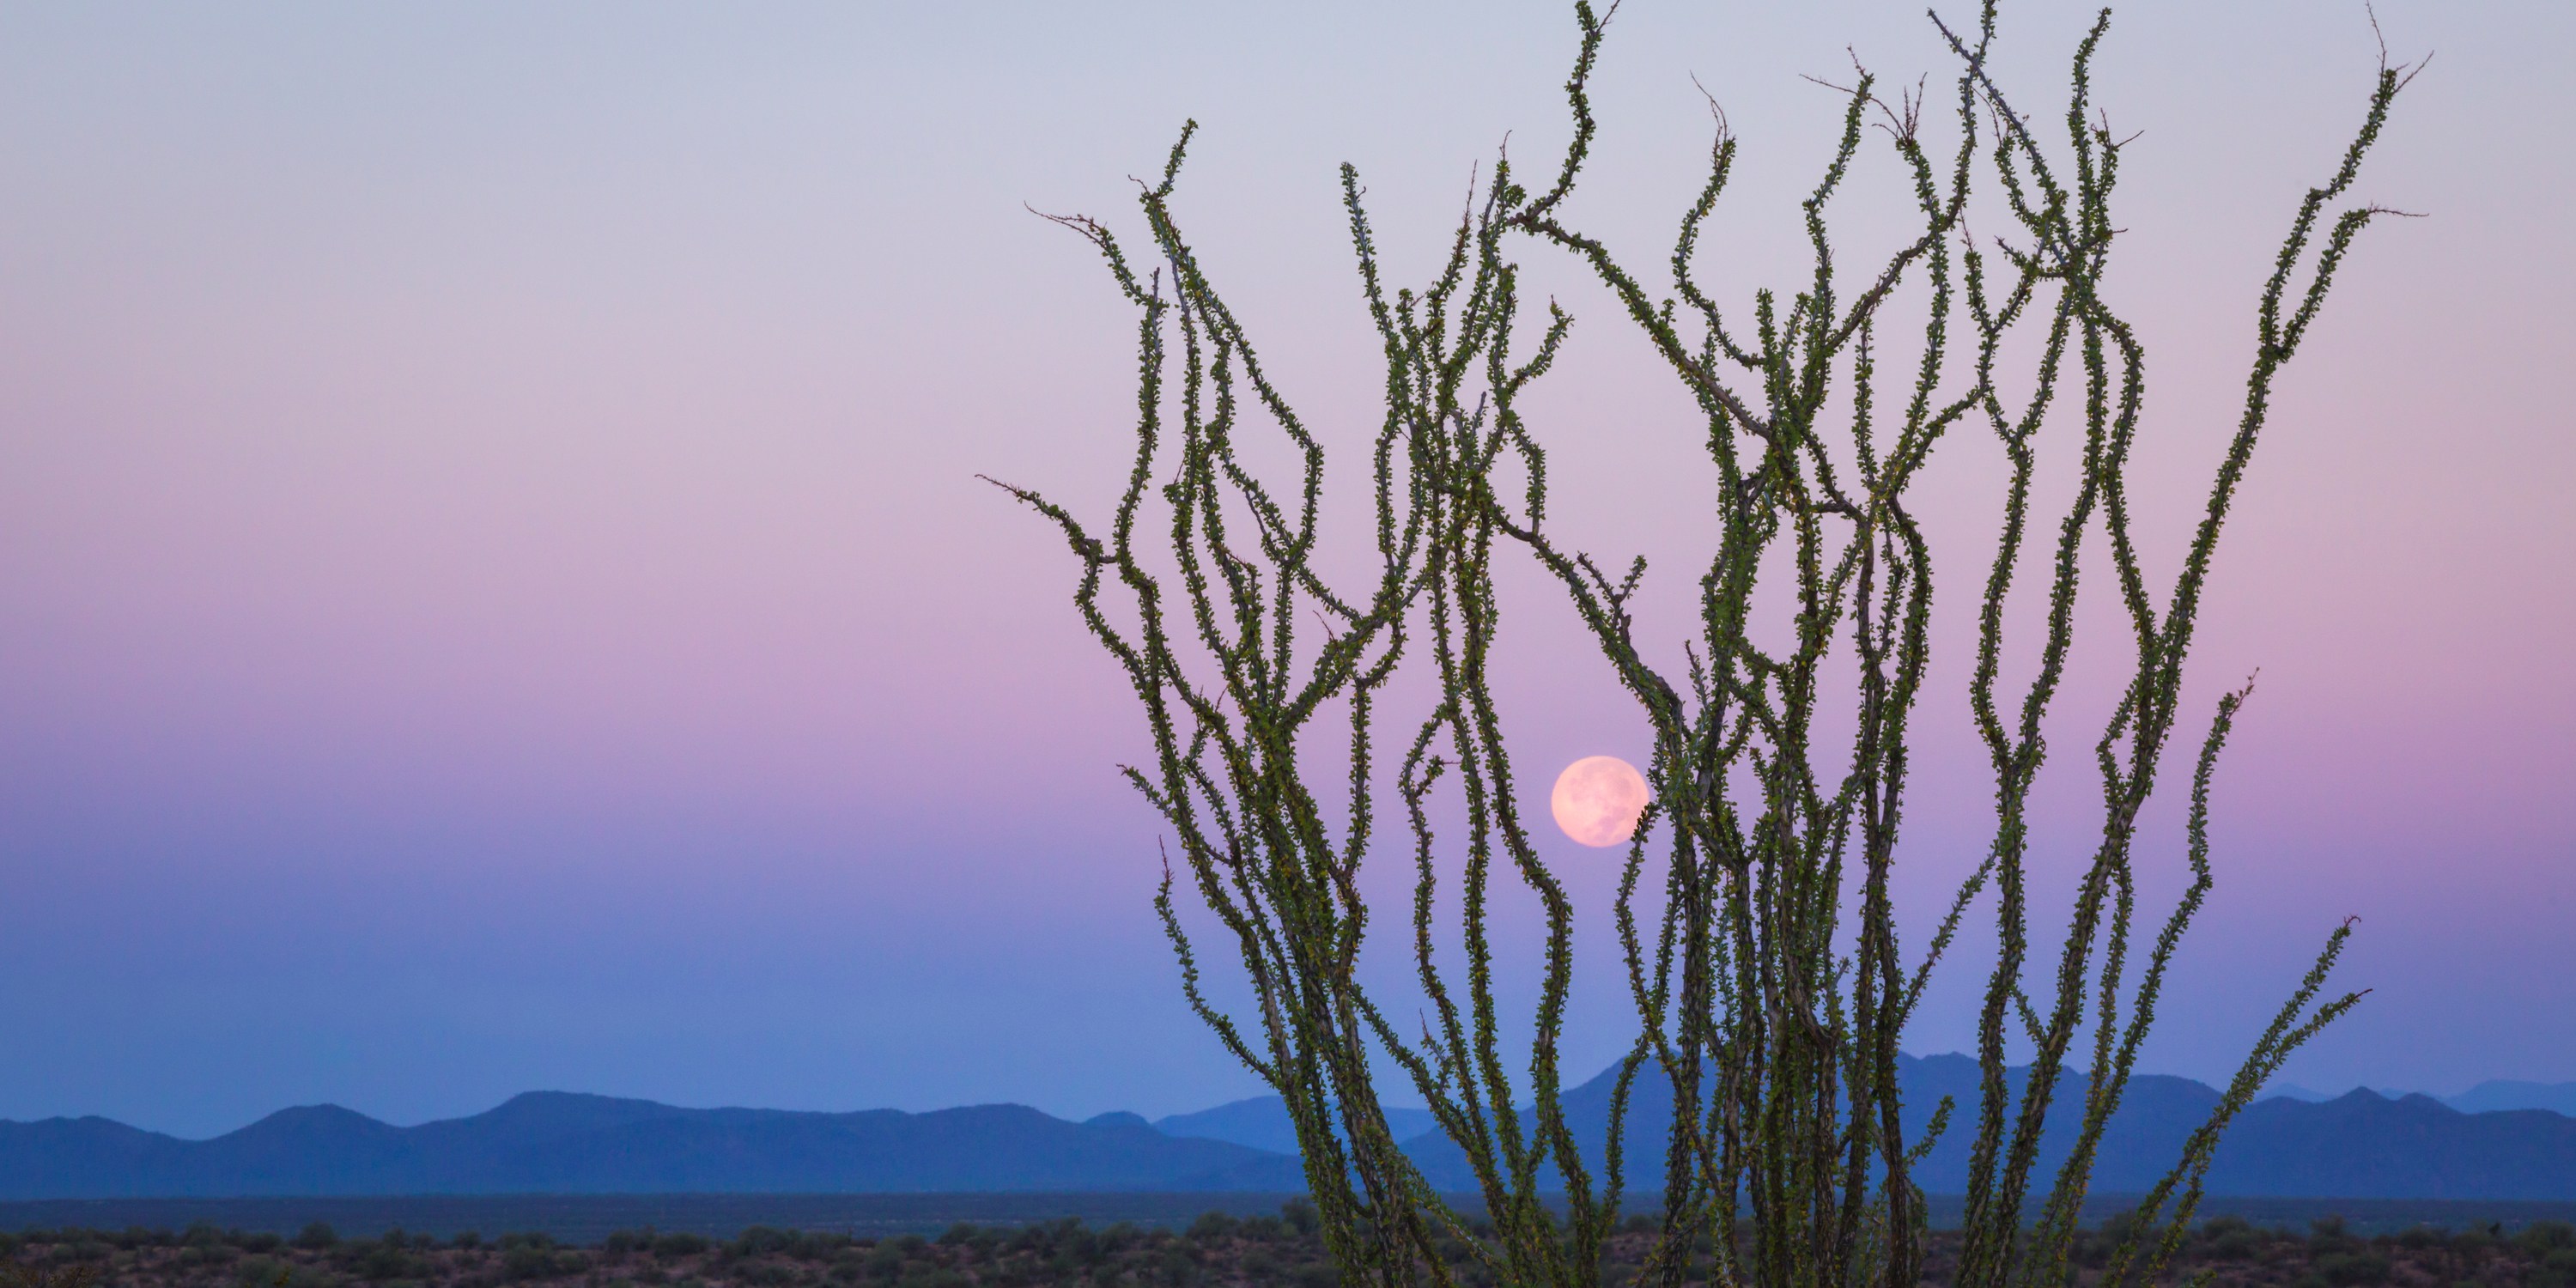 
        <div class='title'>
          Ocotillo Moonset wall art
        </div>
       
        <div class='description'>
          Wall art photography piece showing a full moon setting behind an ocotillo cactus in the Arizona desert
        </div>
      